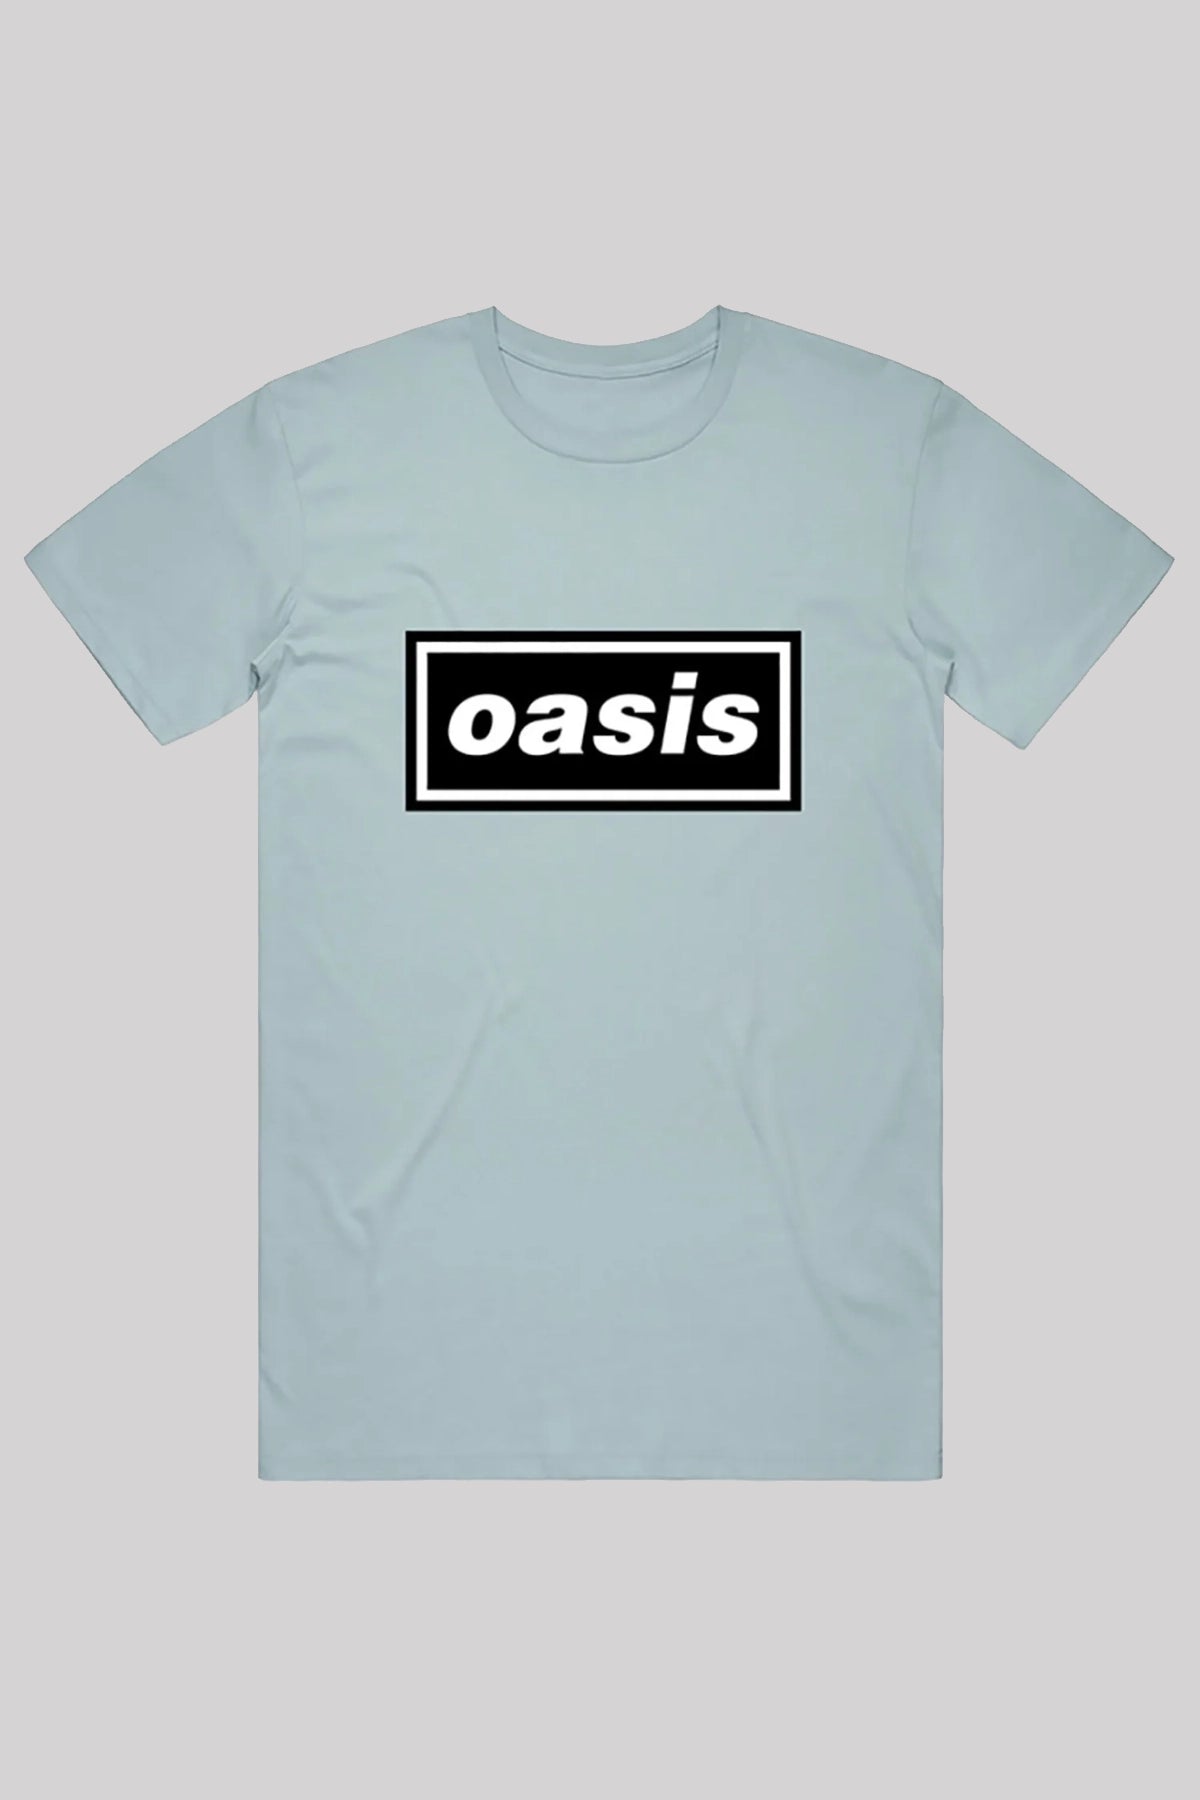 Oasis Classic Logo Light Blue T-Shirt